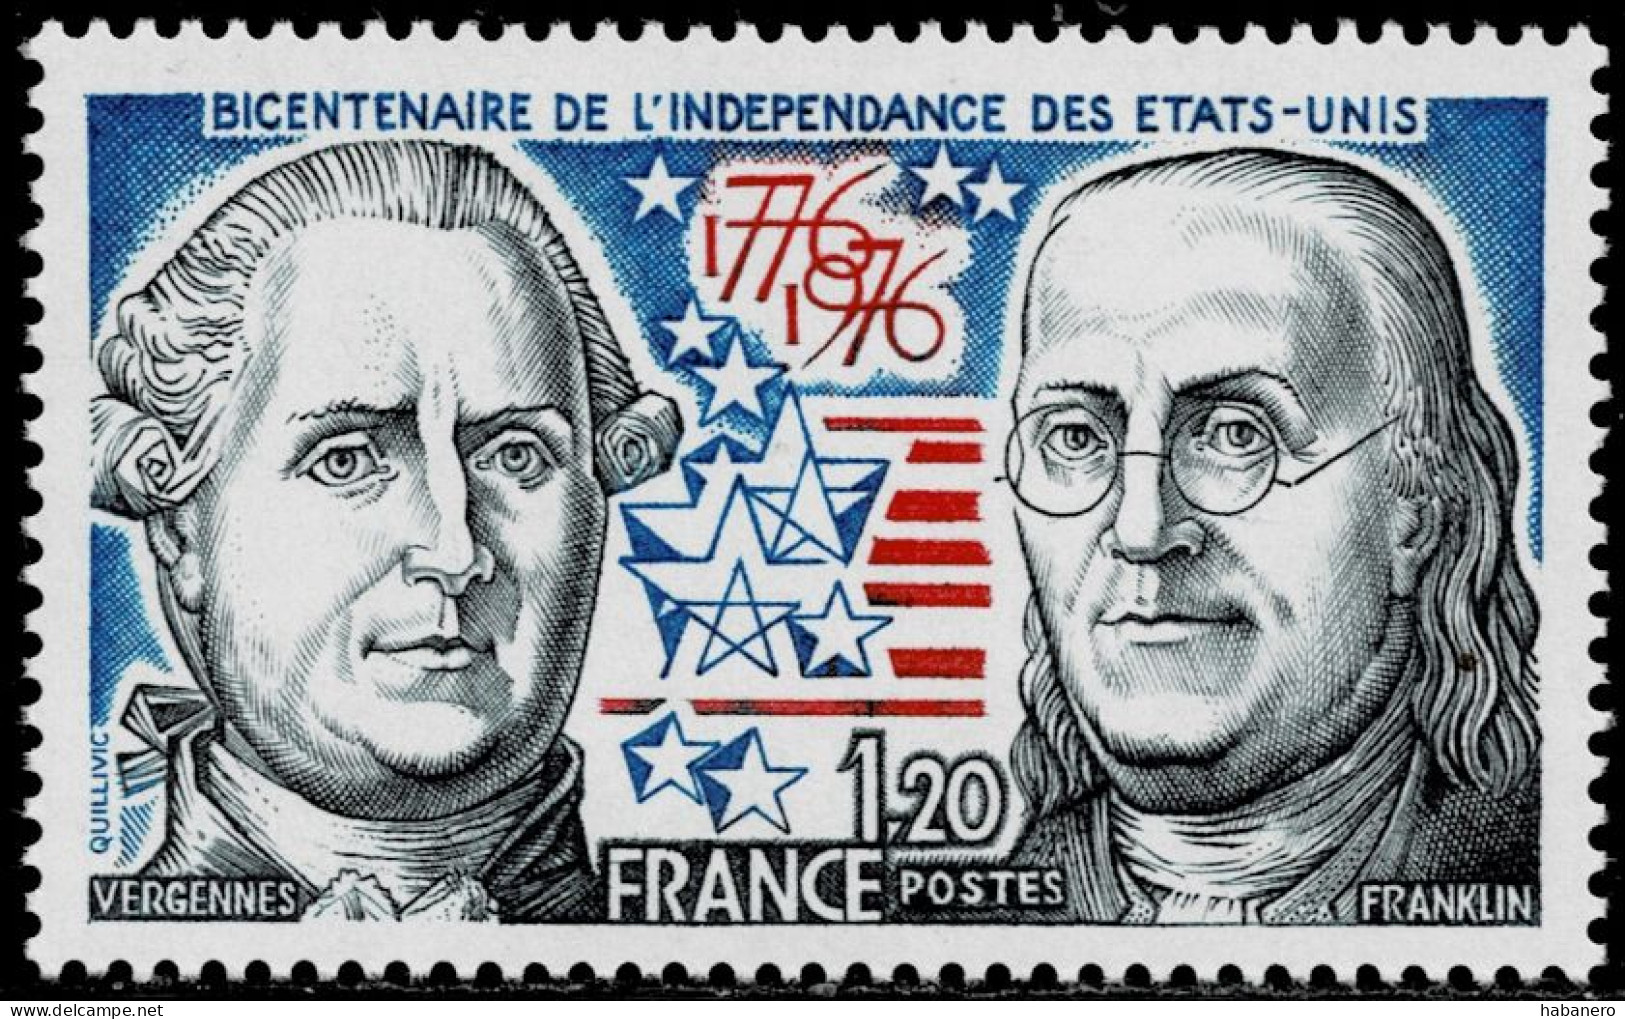 FRANCE 1976 Mi 1963 BICENTENARY OF AMERICAN REVOLUTION MINT STAMP ** - Indipendenza Stati Uniti